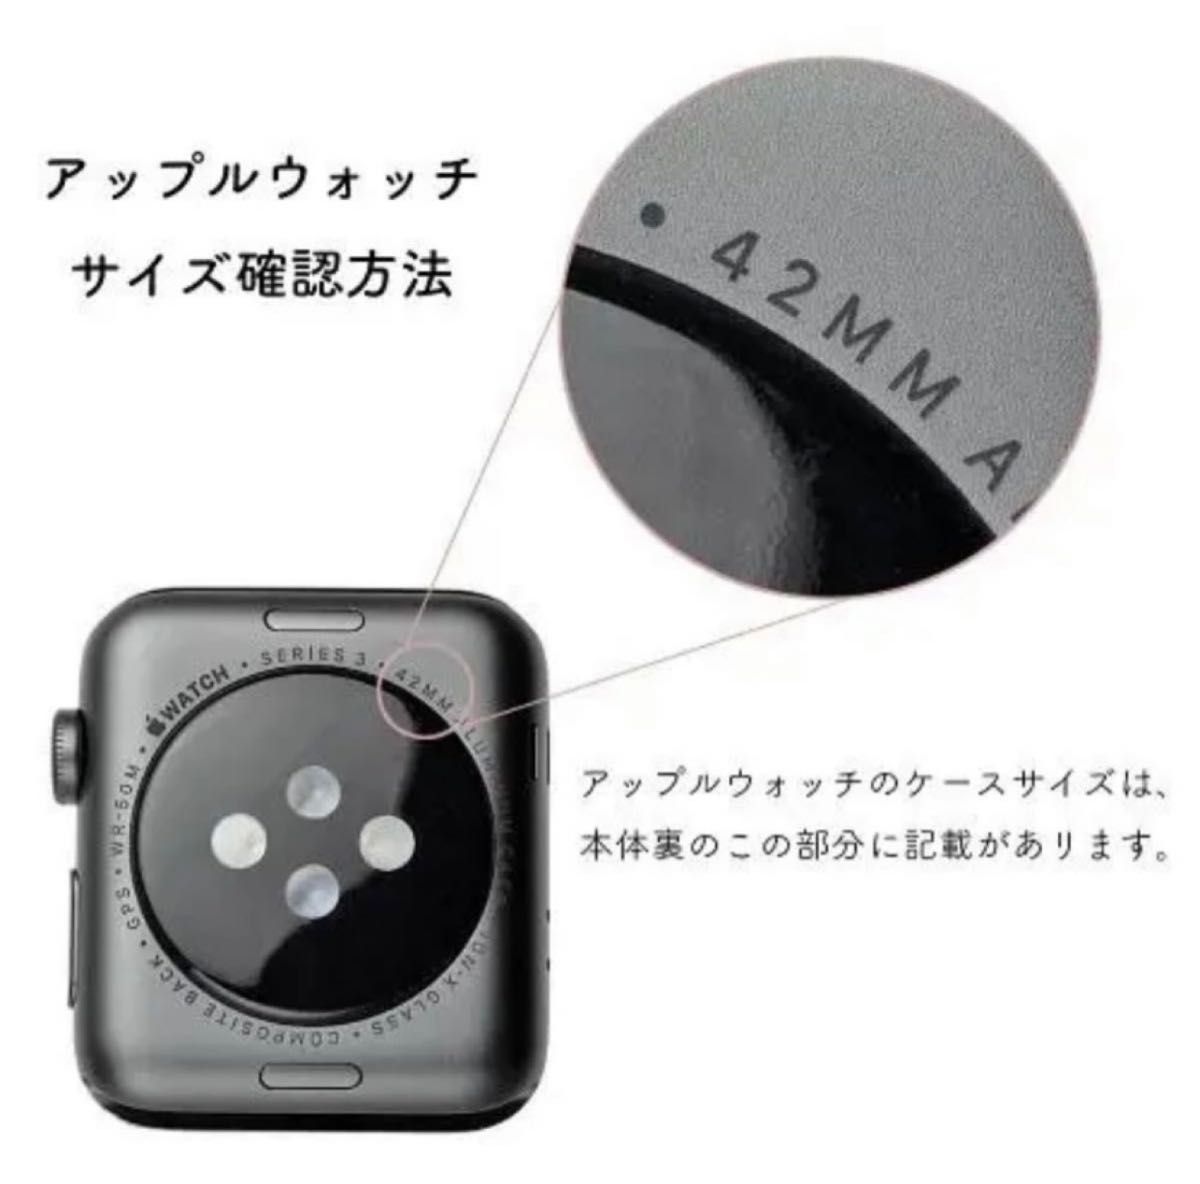 Apple Watch Case 360°全面保護ケース　9Hガラス　落下防止 防水防塵　44mmサイズ